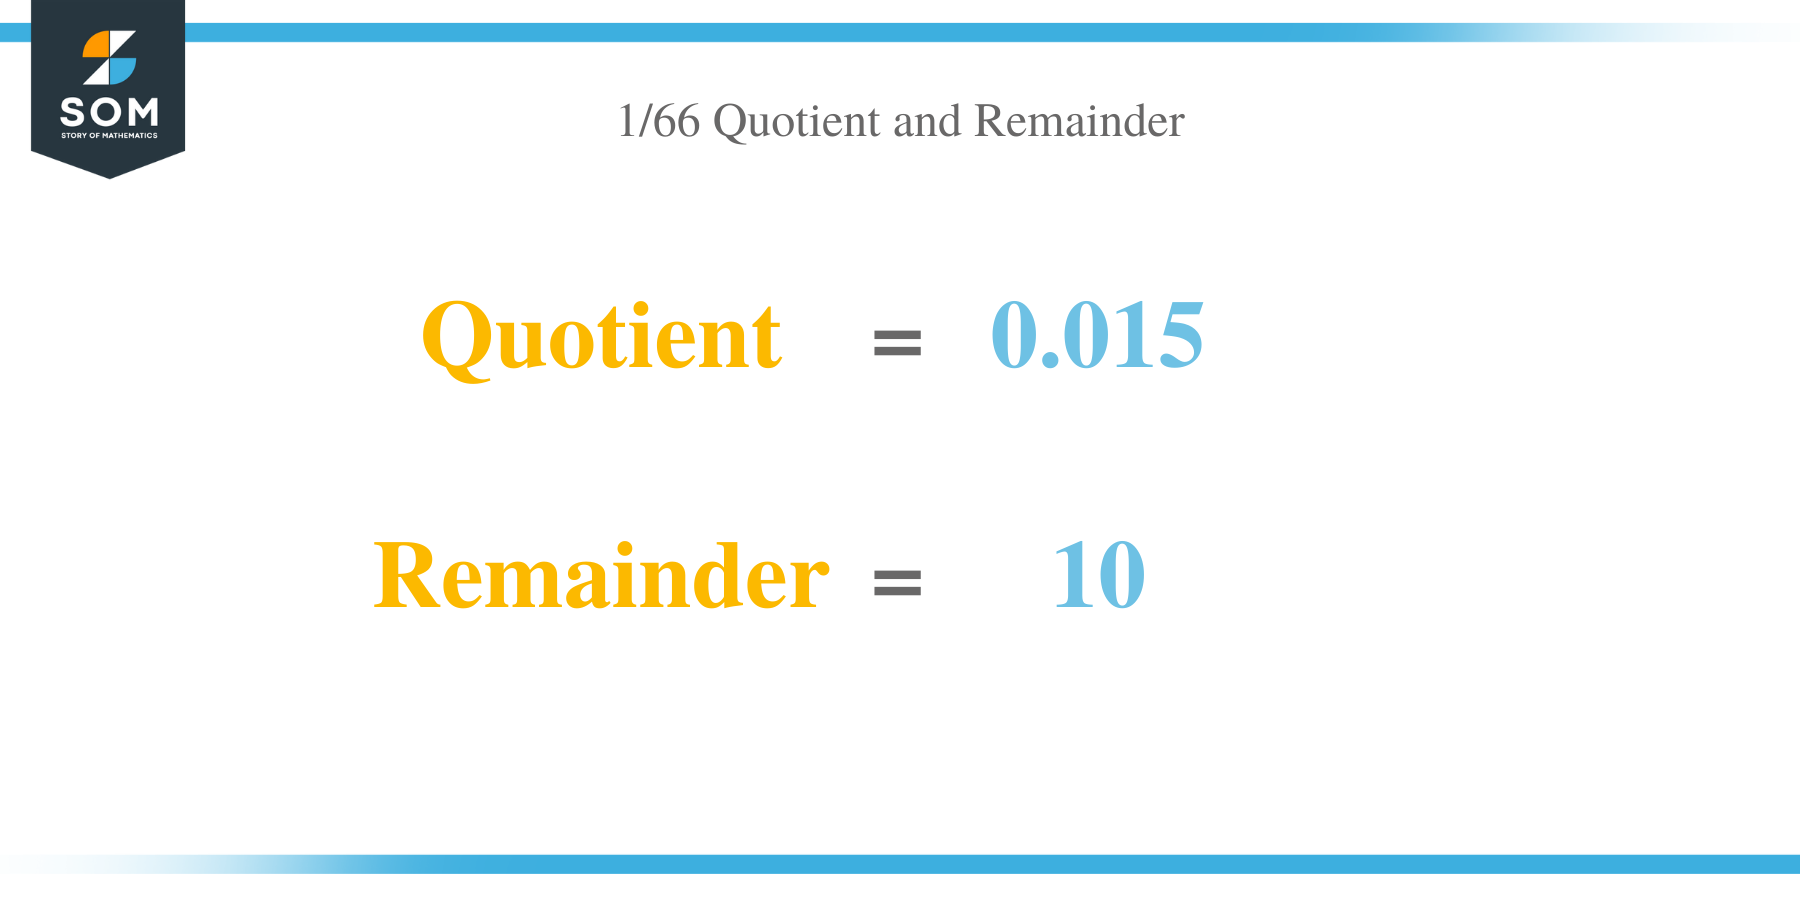 Quotient and Remainder of 1 per 66